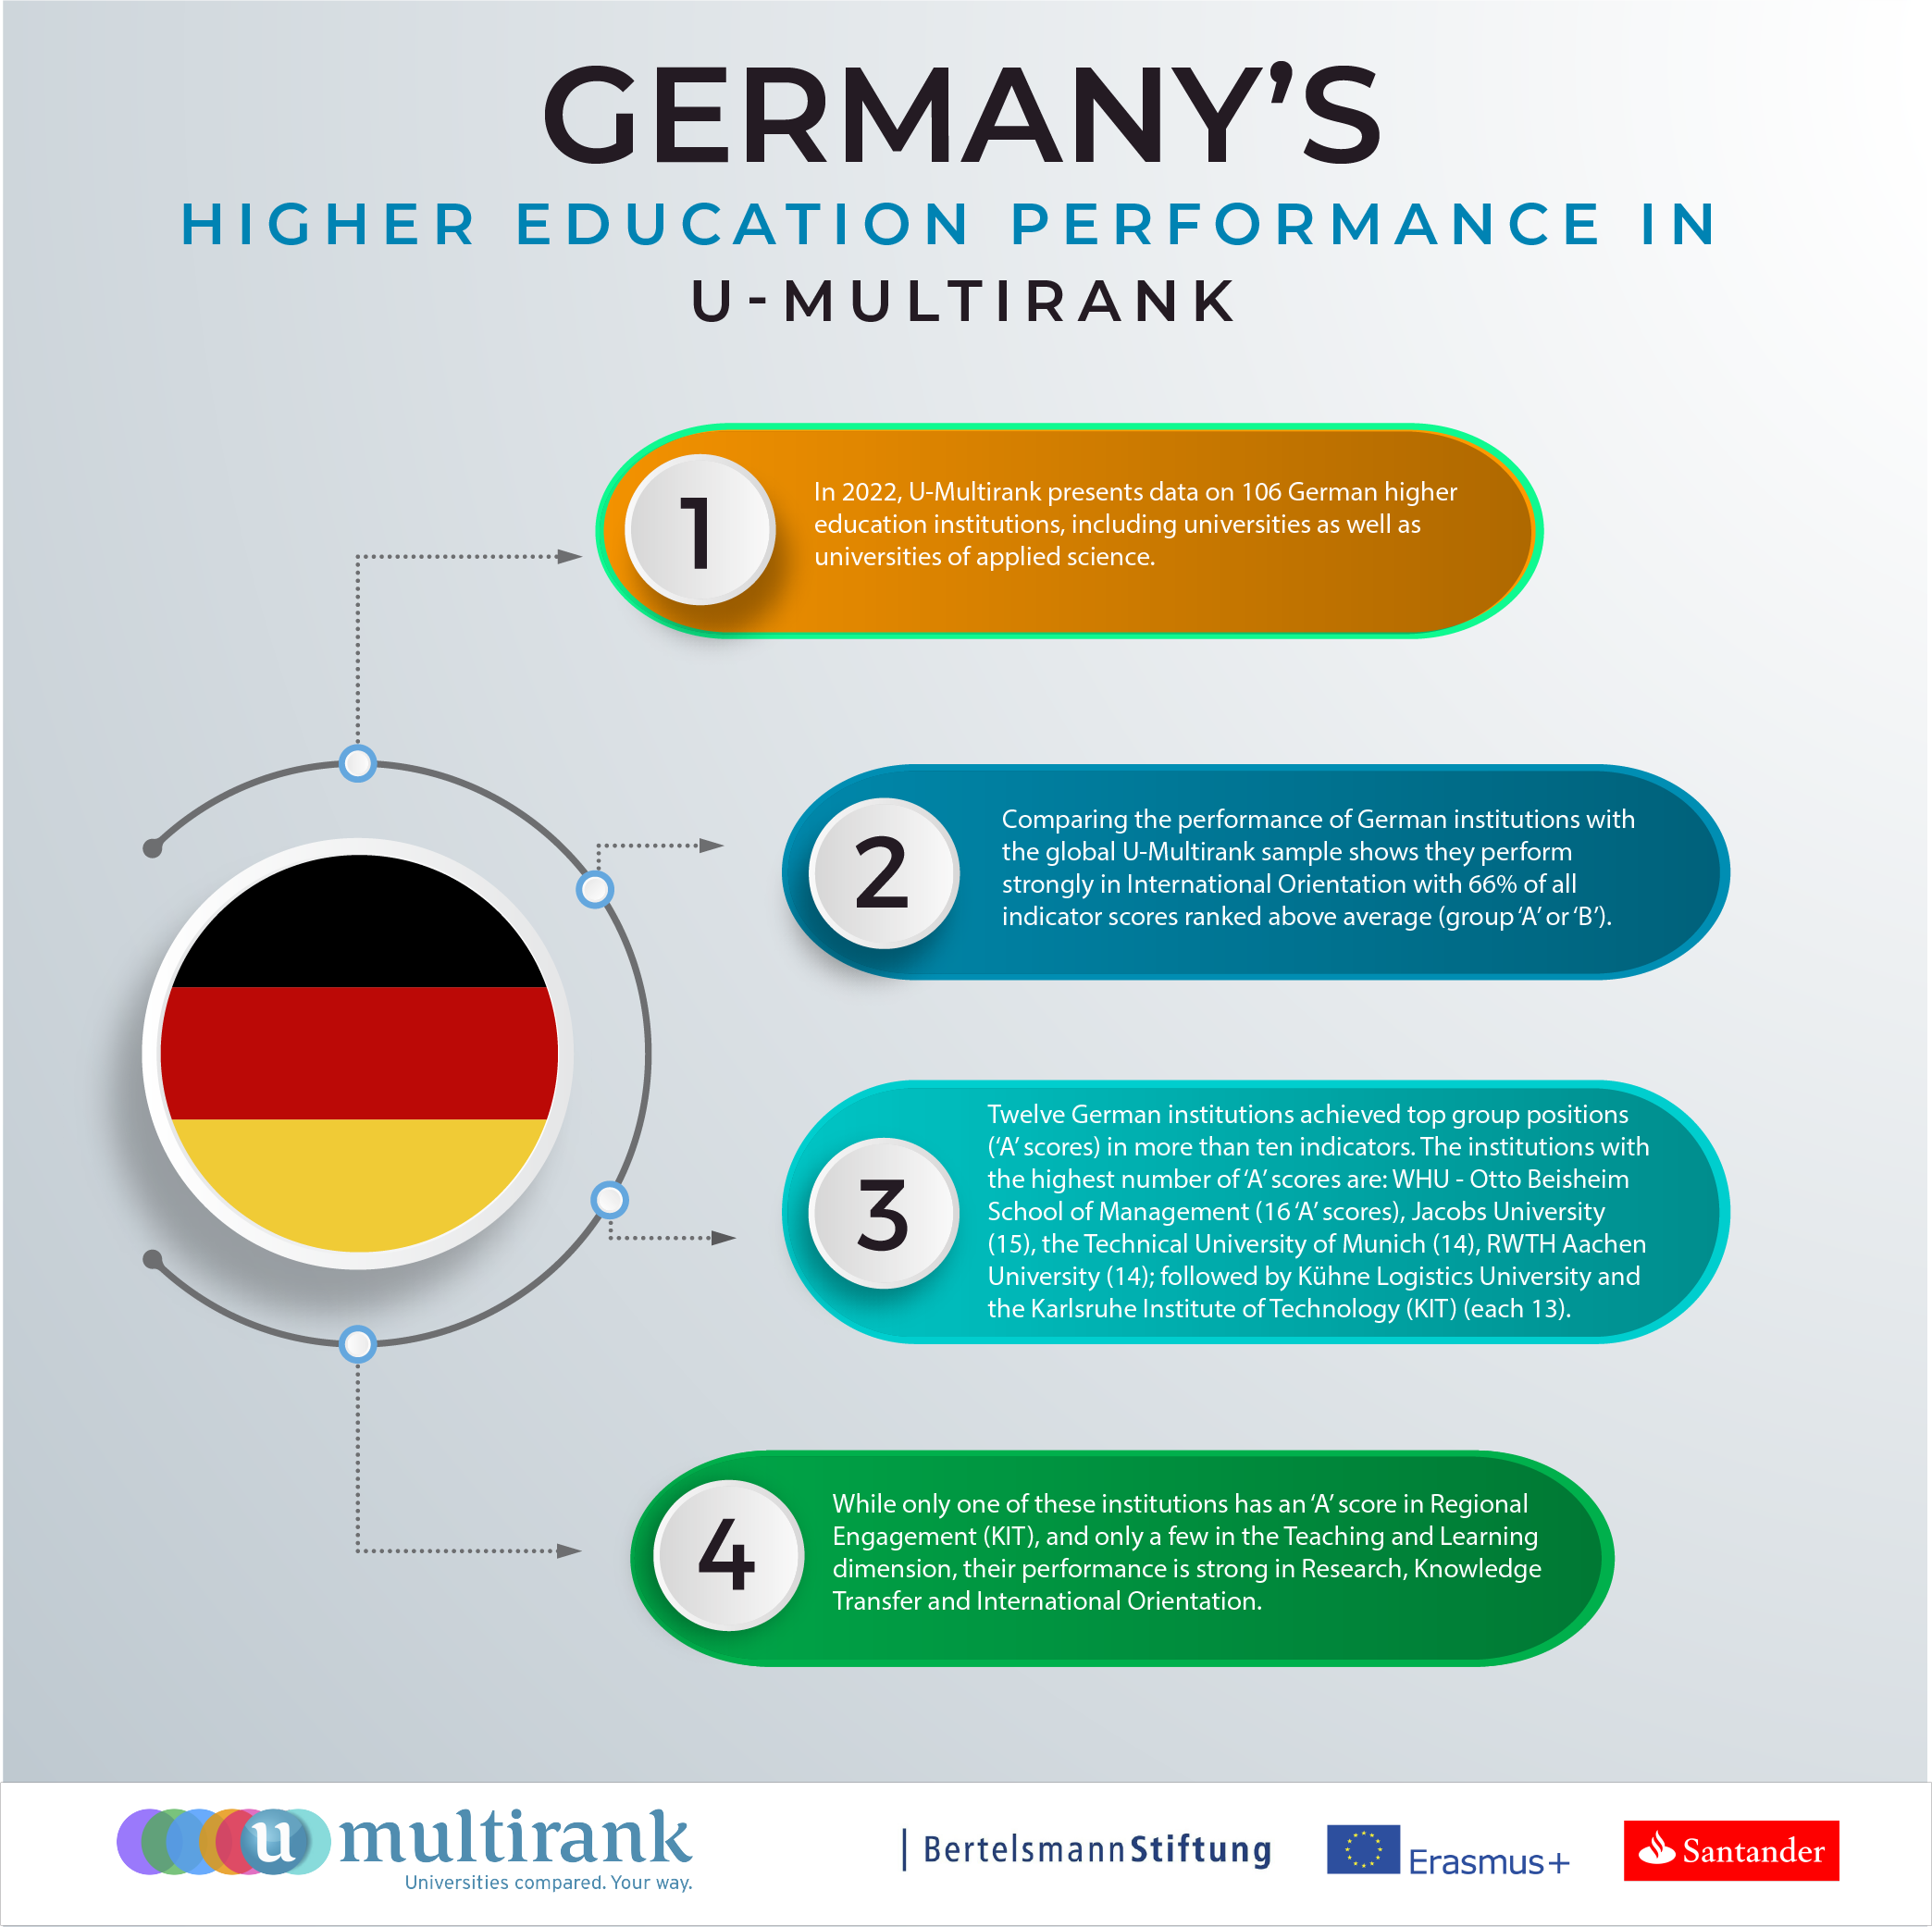 Germany's Higher Education Performance in U-Multirank